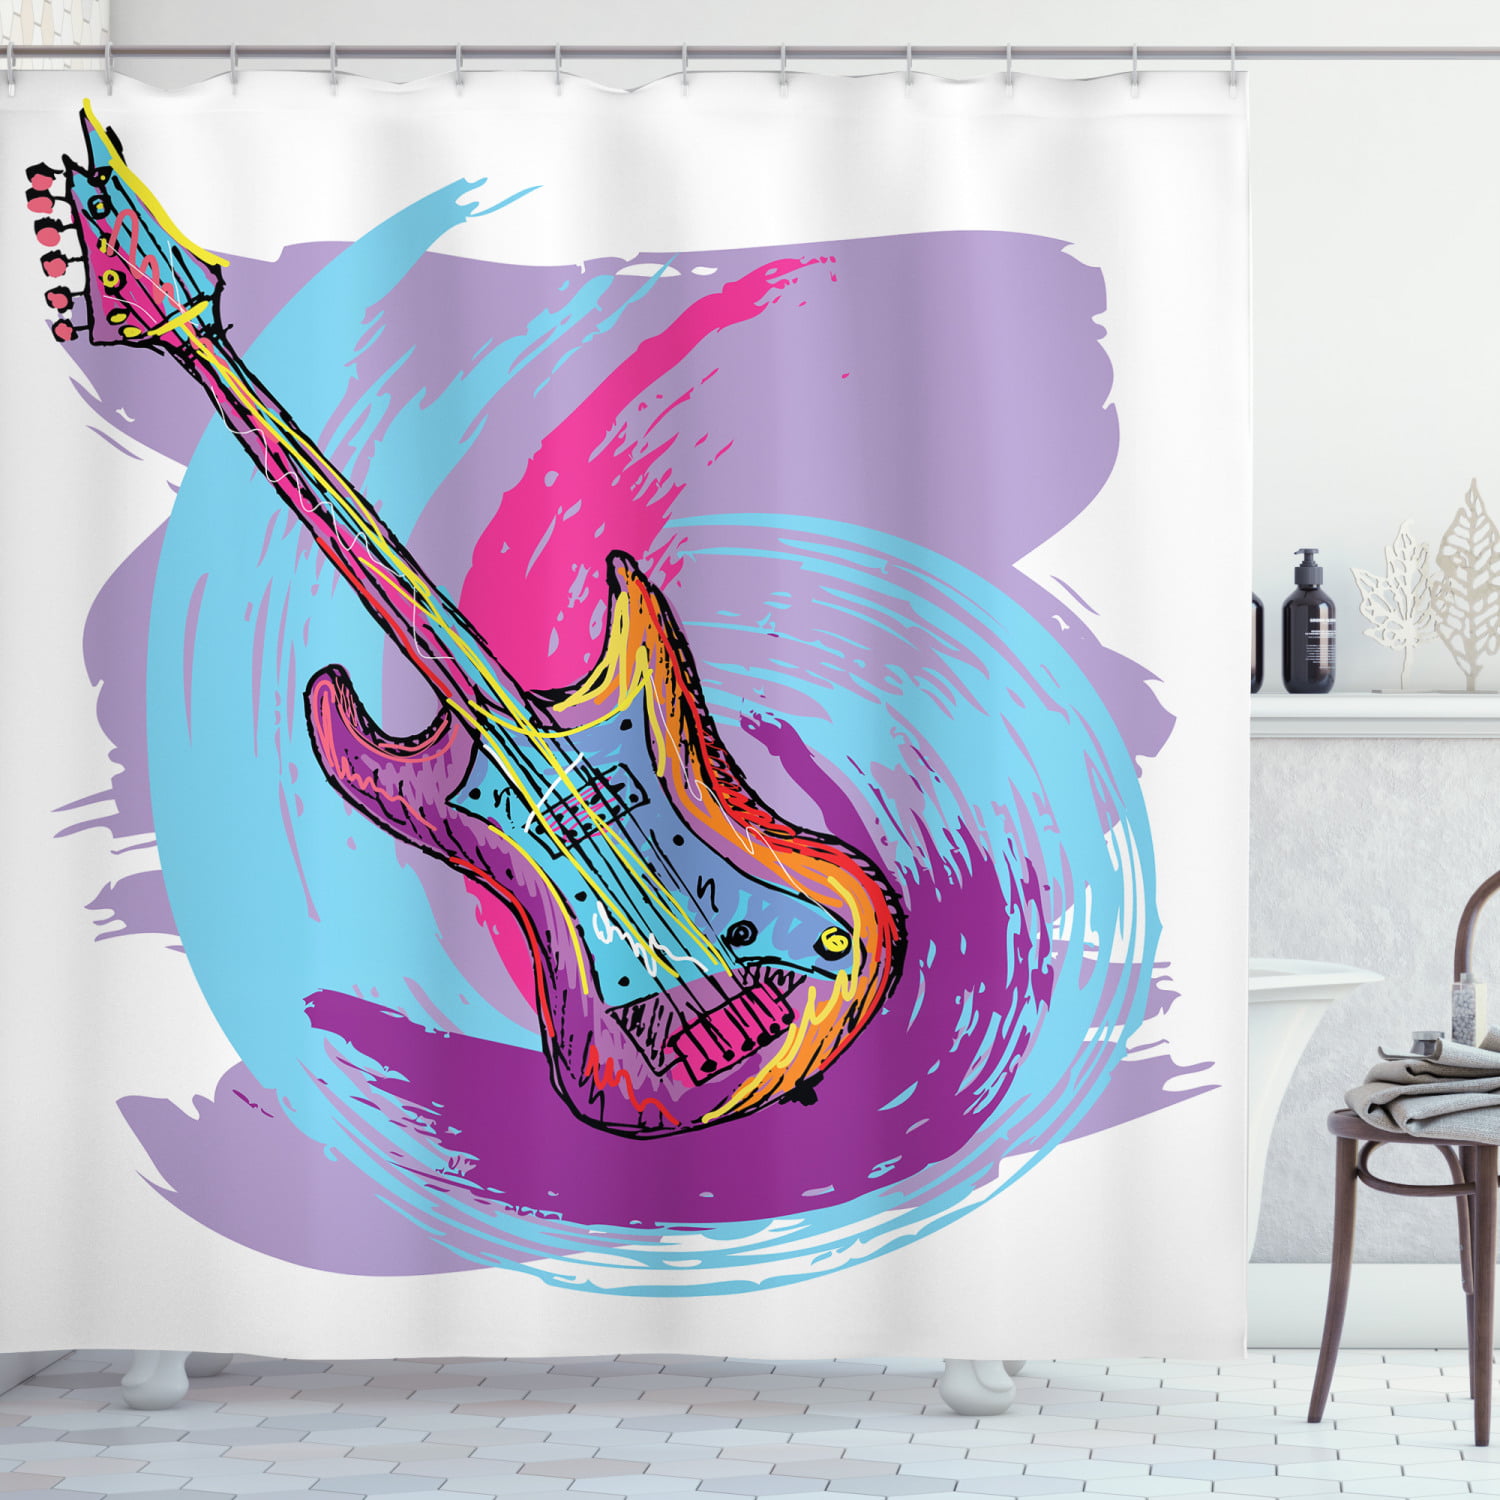 Guitar Graphic Shower Curtain set Musical Instruments Bathroom decor 71inch Long 